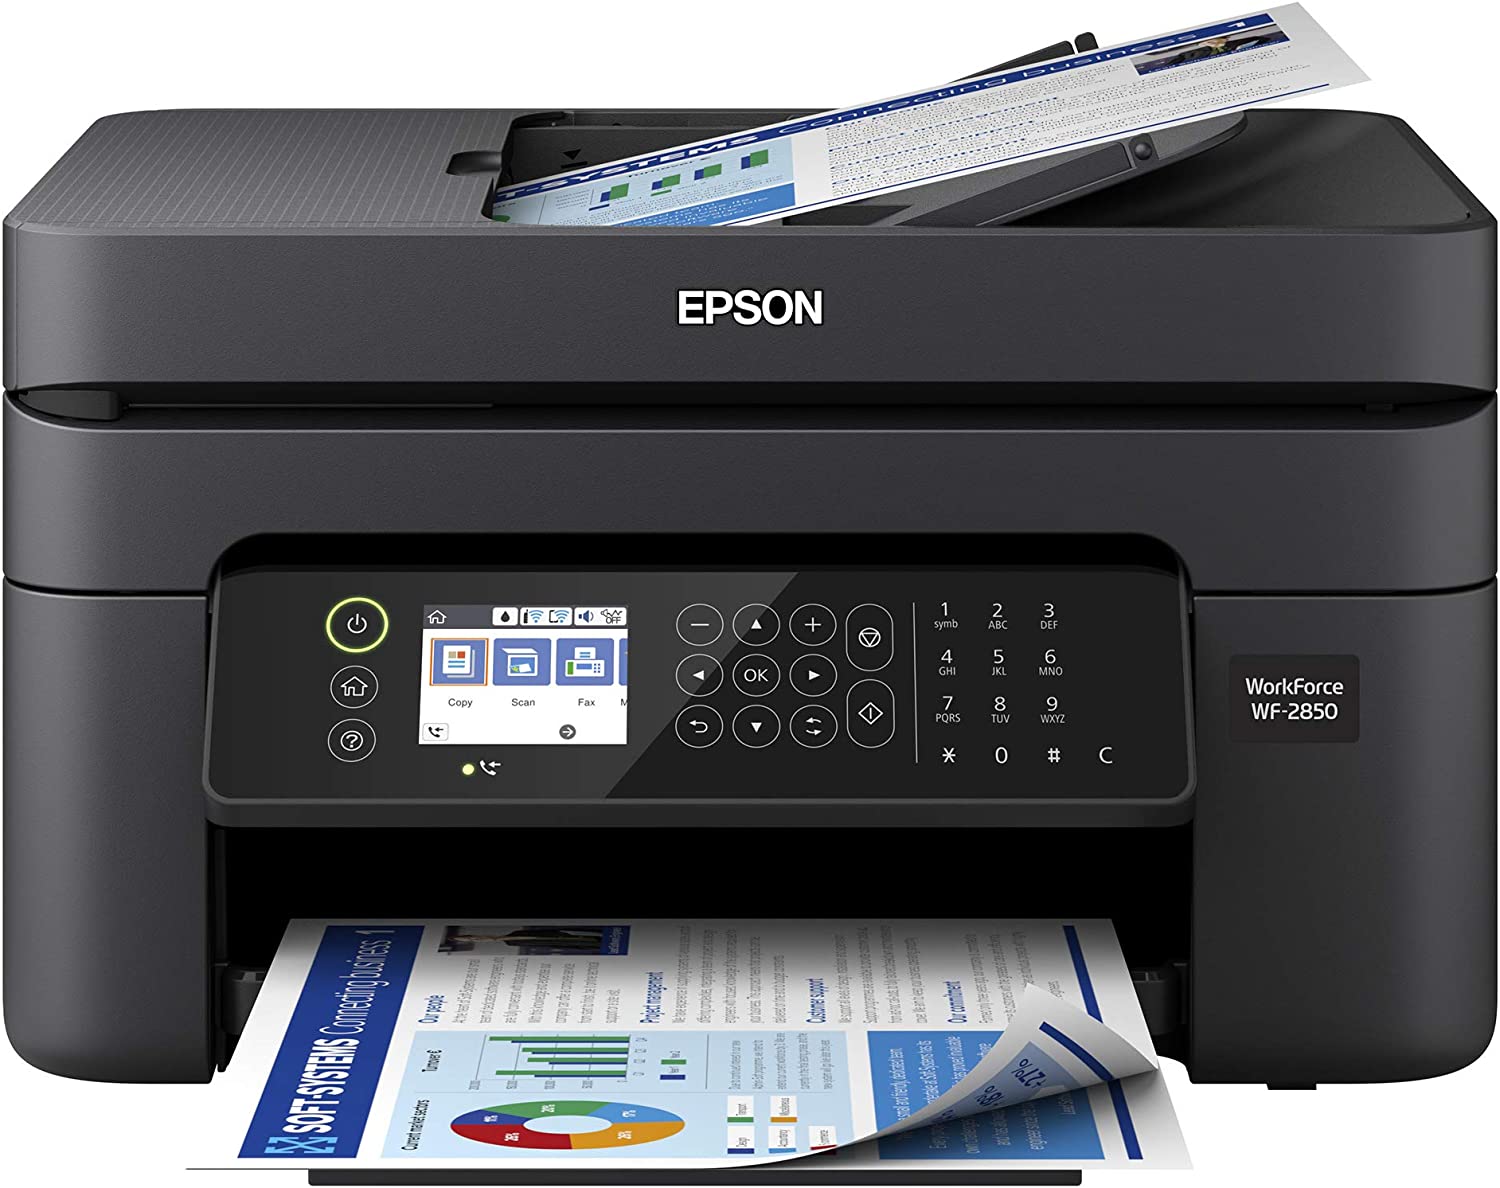 Epson 440 Firmware Downgrade